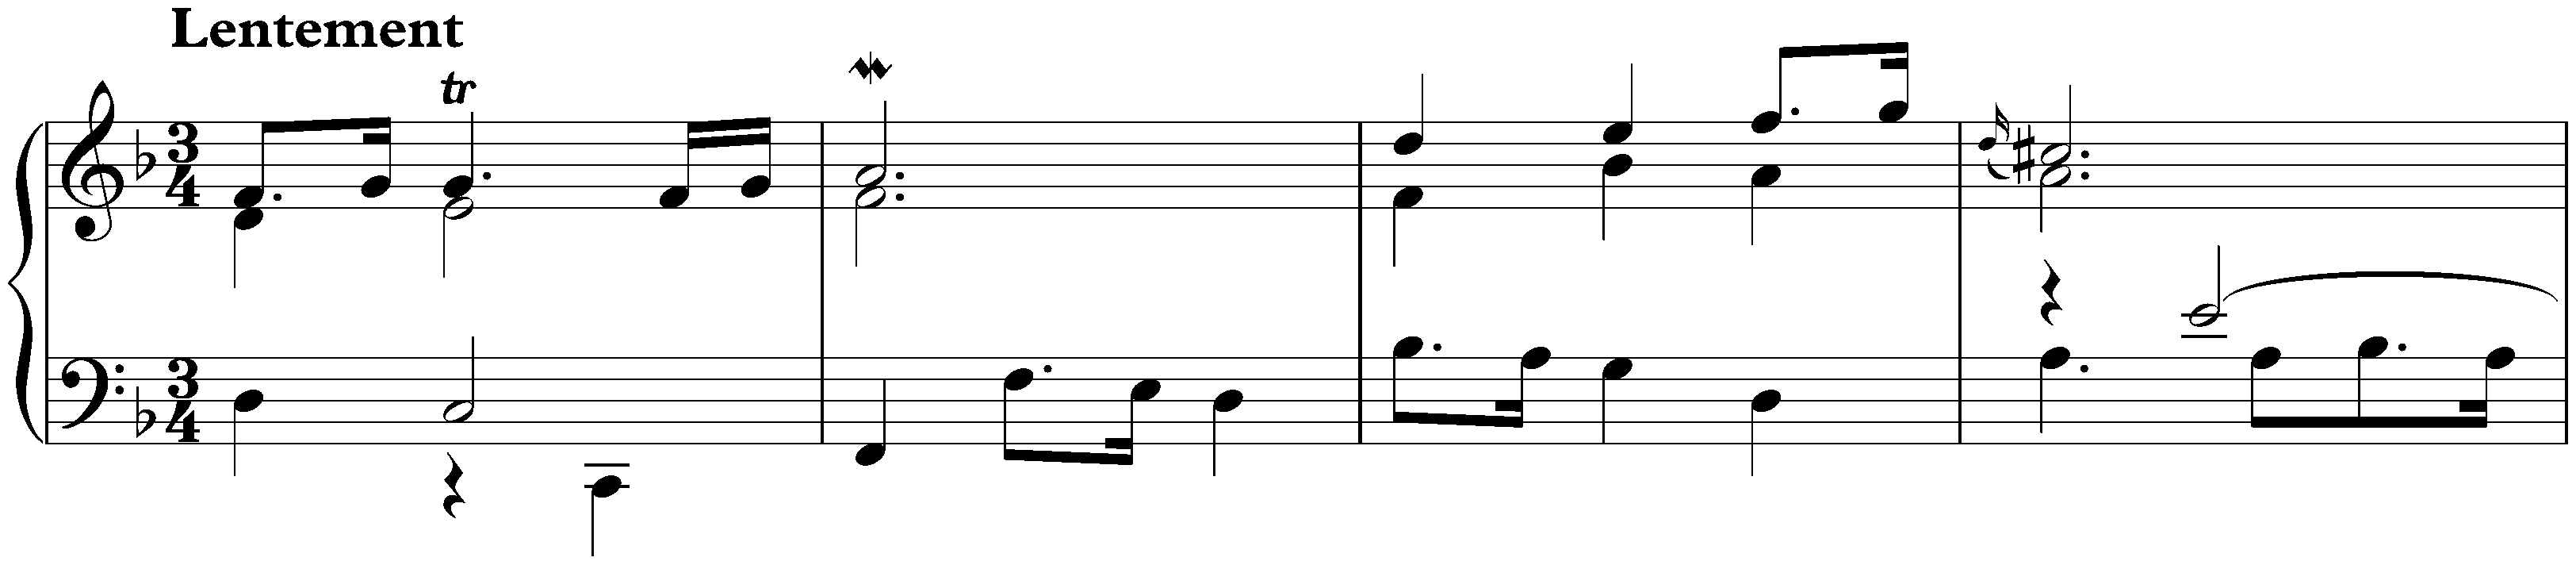 Suite in D minor, HWV 436; 3. Air: Lentement